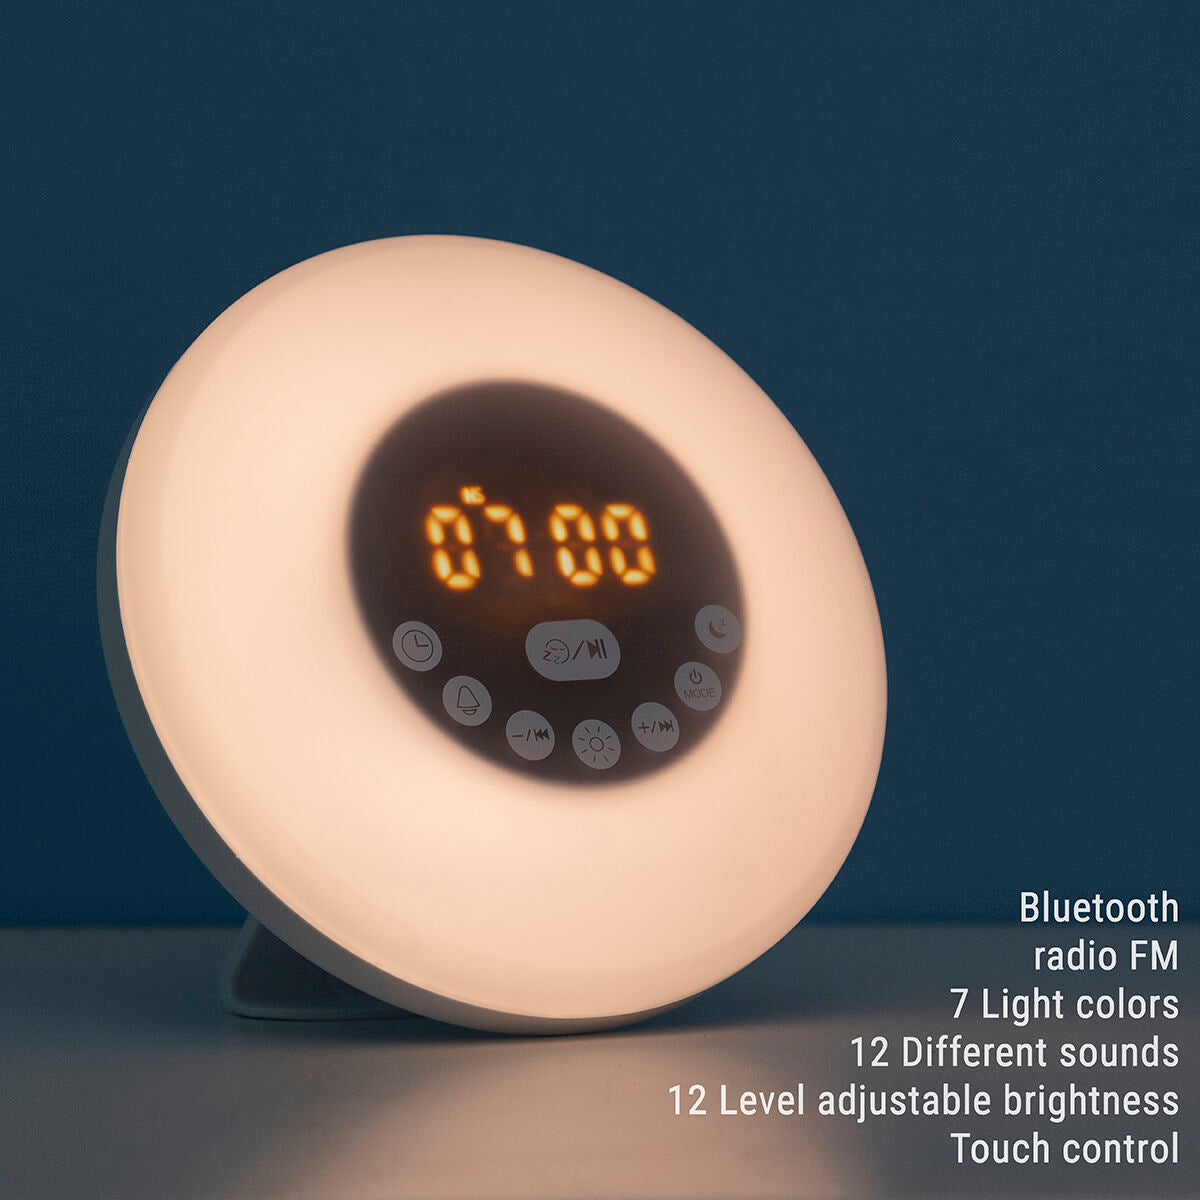 Rechargeable Sunrise Alarm Clock with Speaker Slockar InnovaGoods